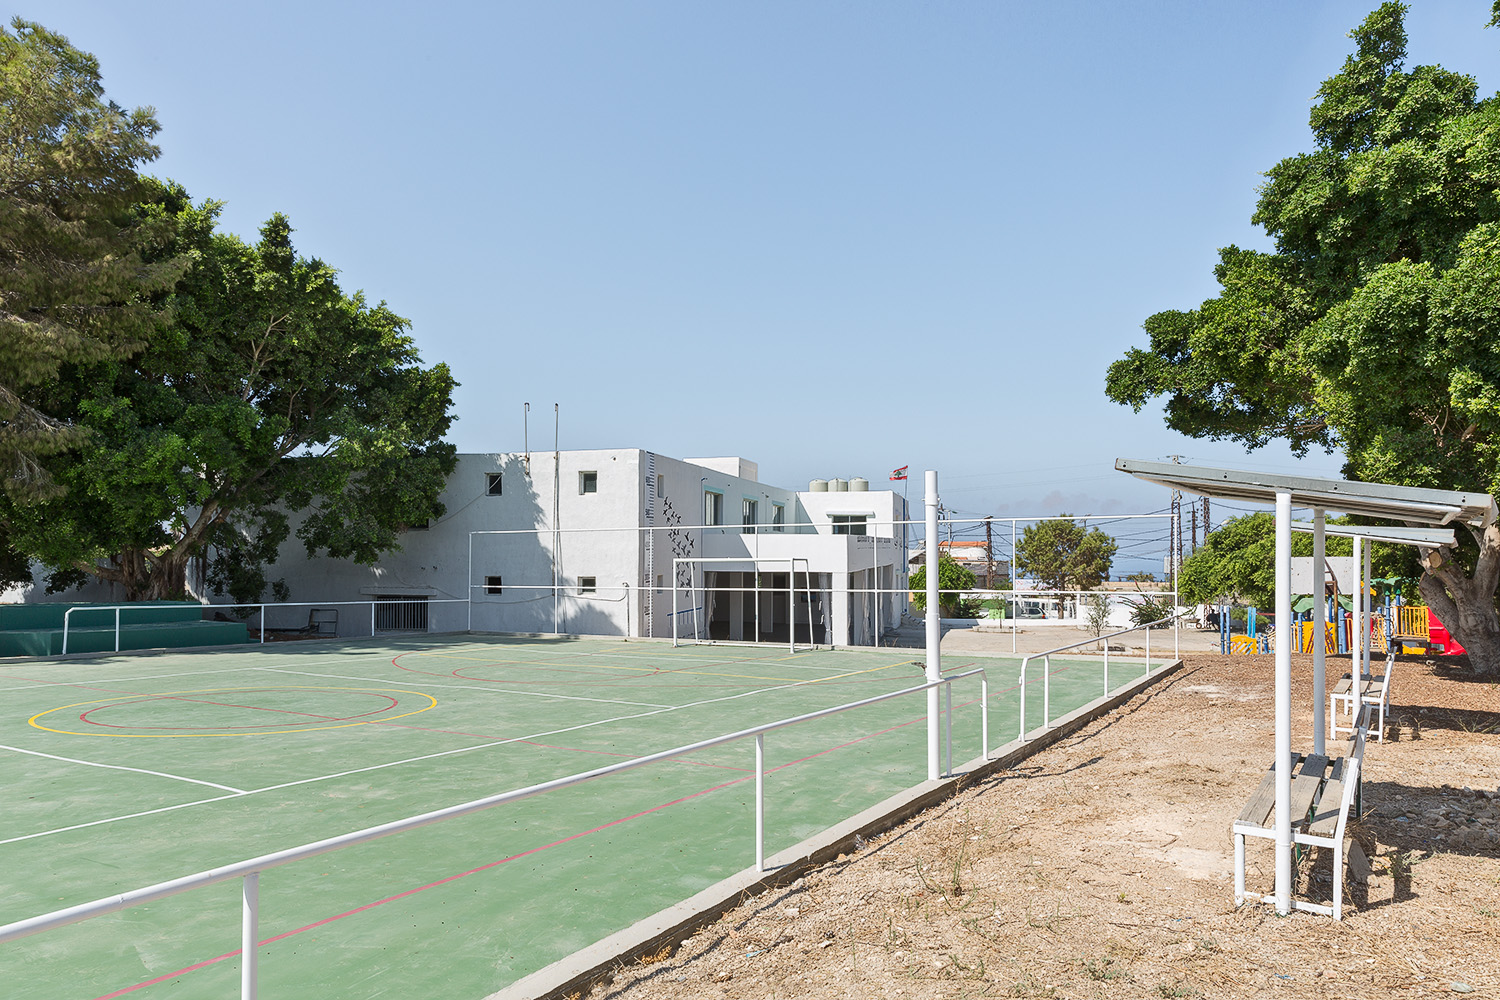  Naqoura Public School - Karim Nader Studio and Blankpage Architects 